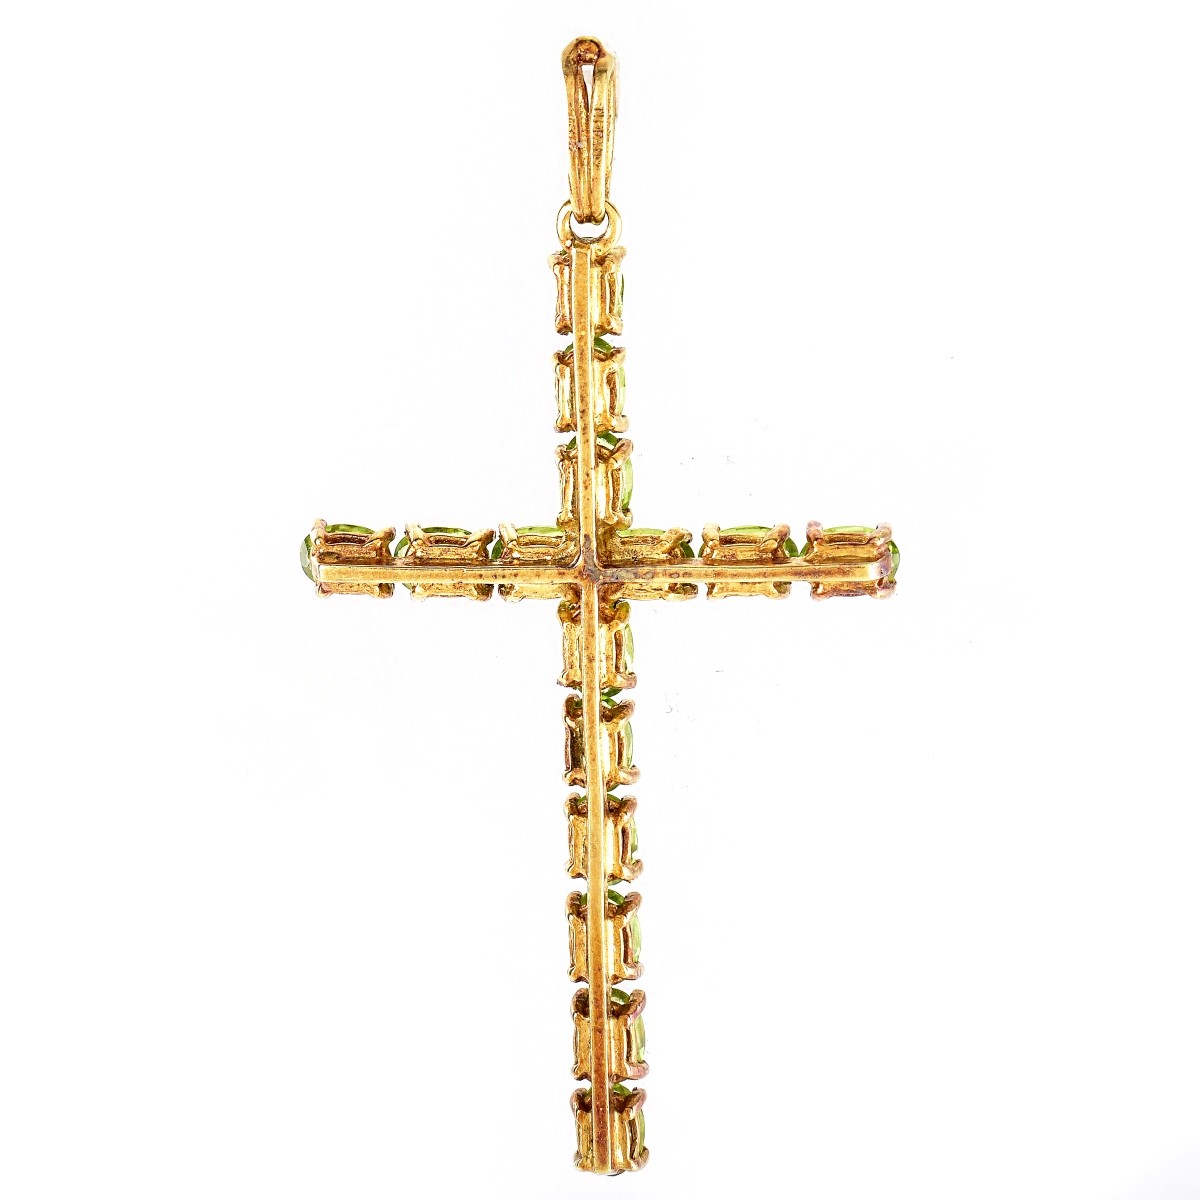 Vintage Tiffany Peridot and 18K Gold Cross Pendant